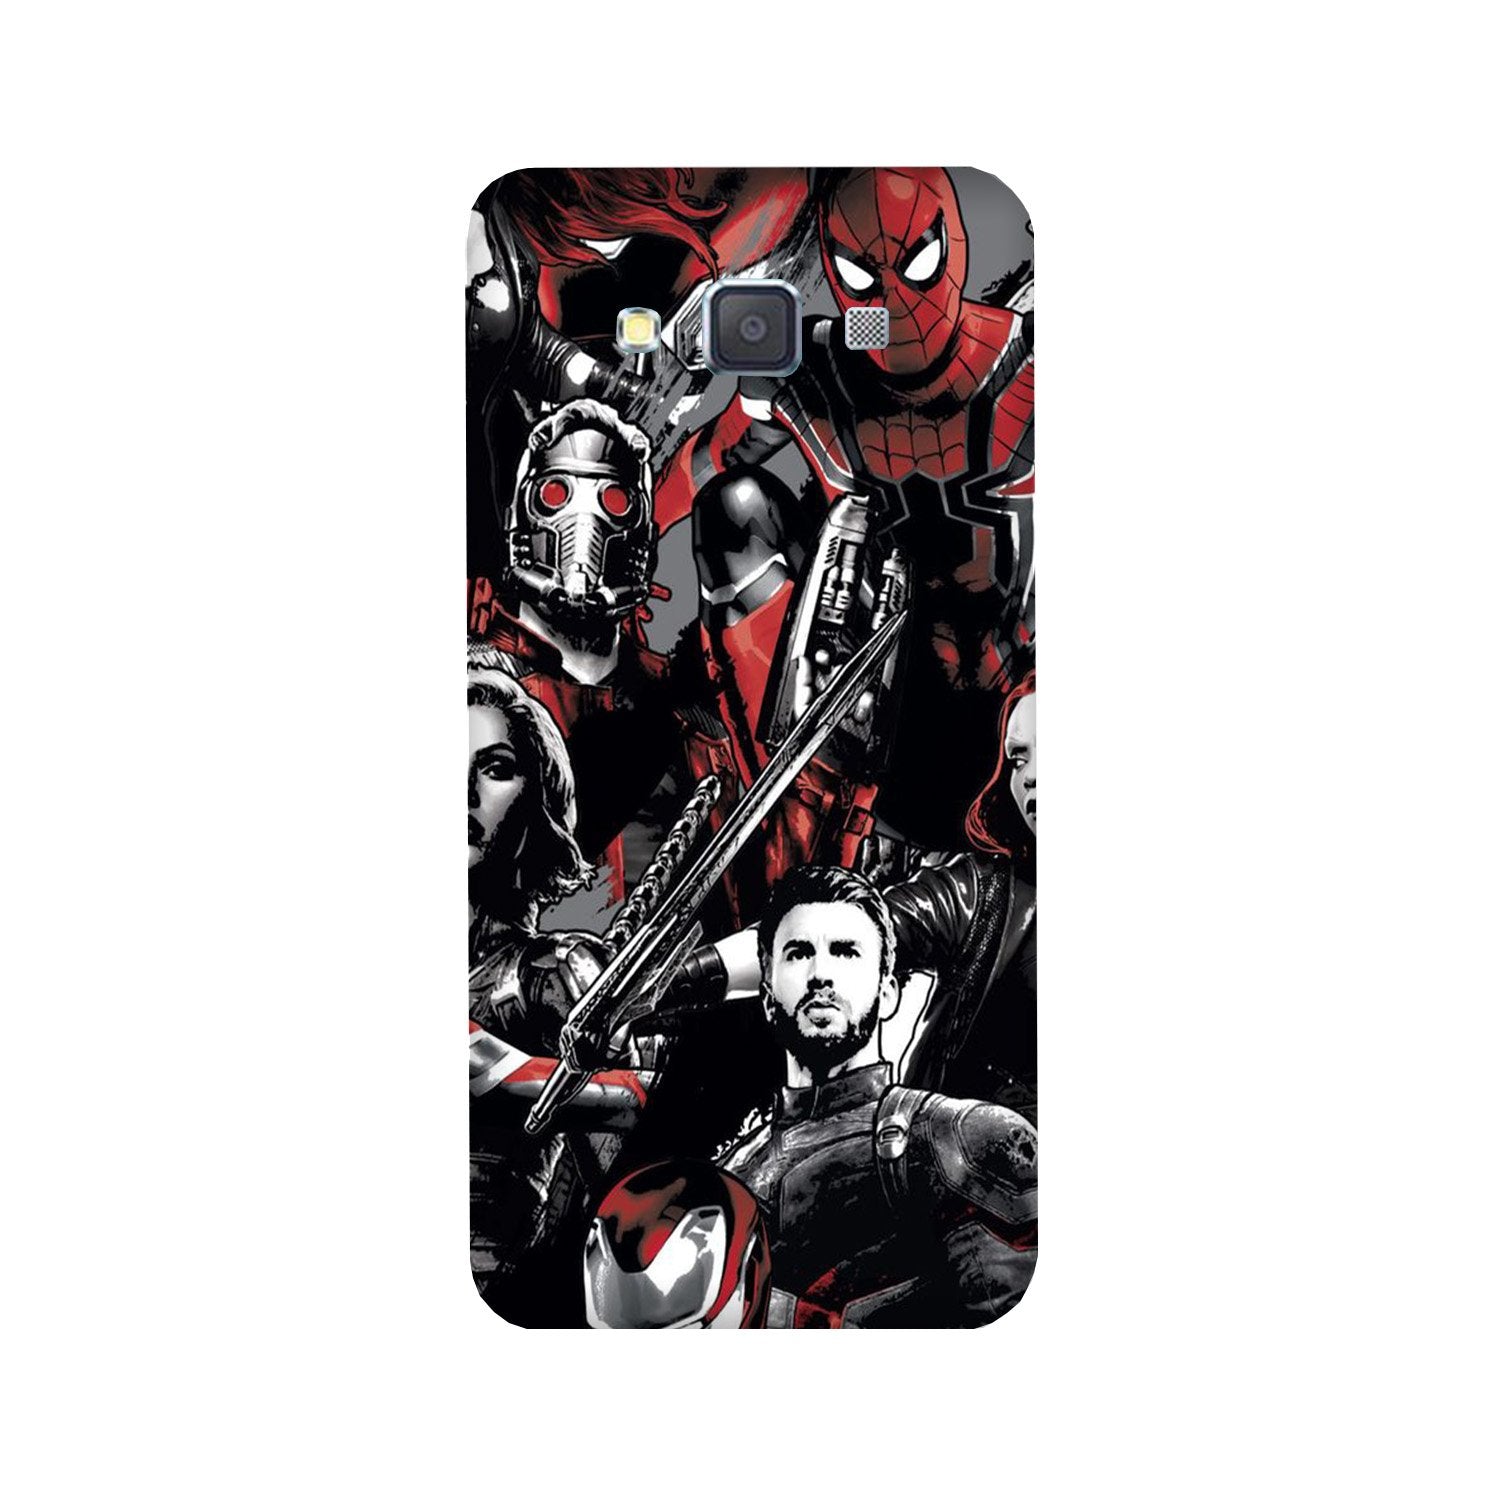 Avengers Case for Galaxy Grand Prime (Design - 190)